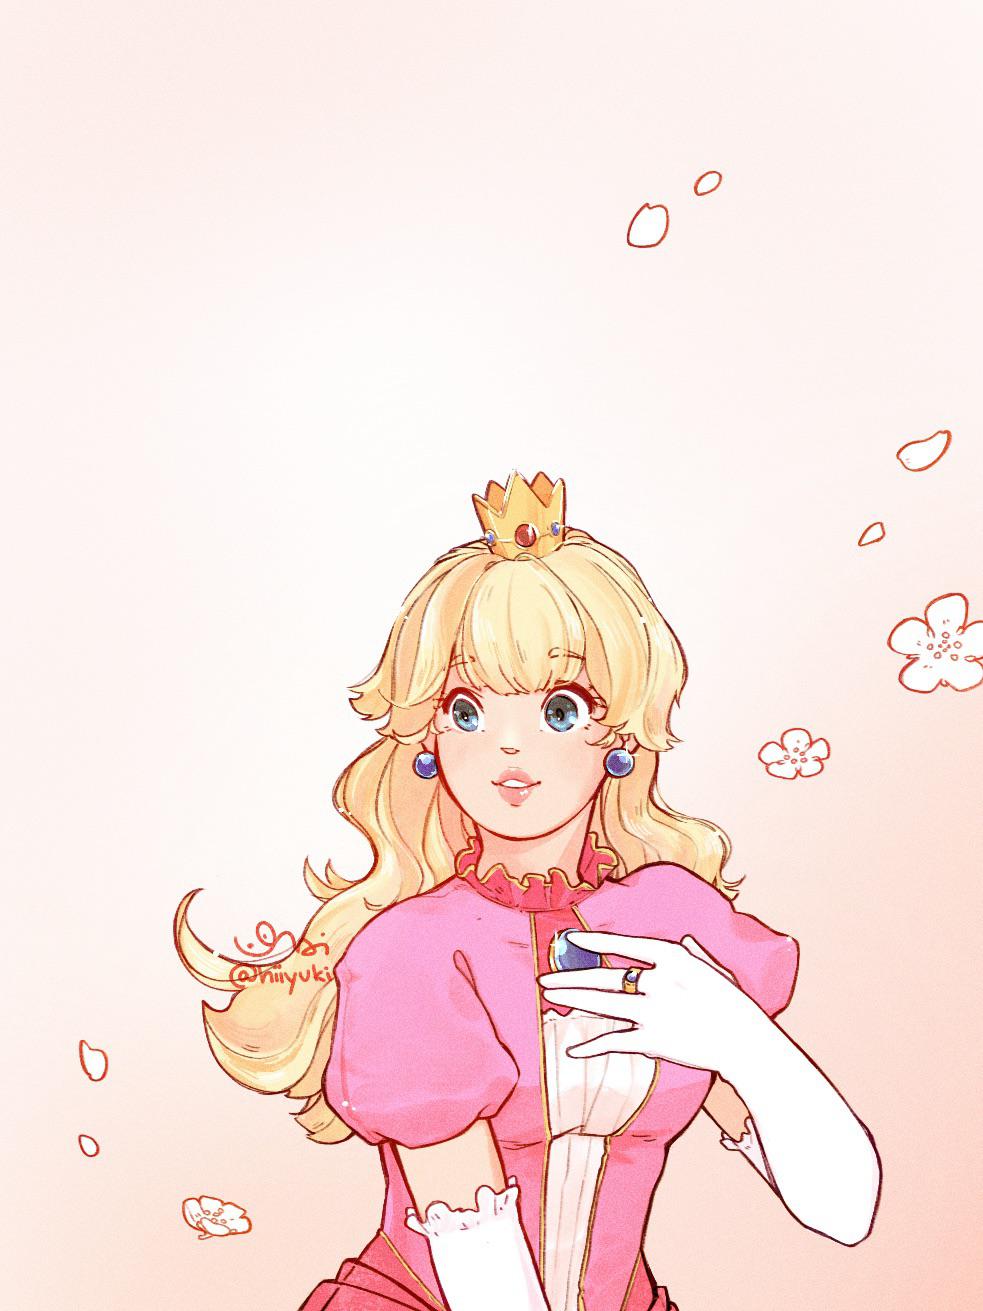 A cartoon character with long blonde hair - Princess Peach